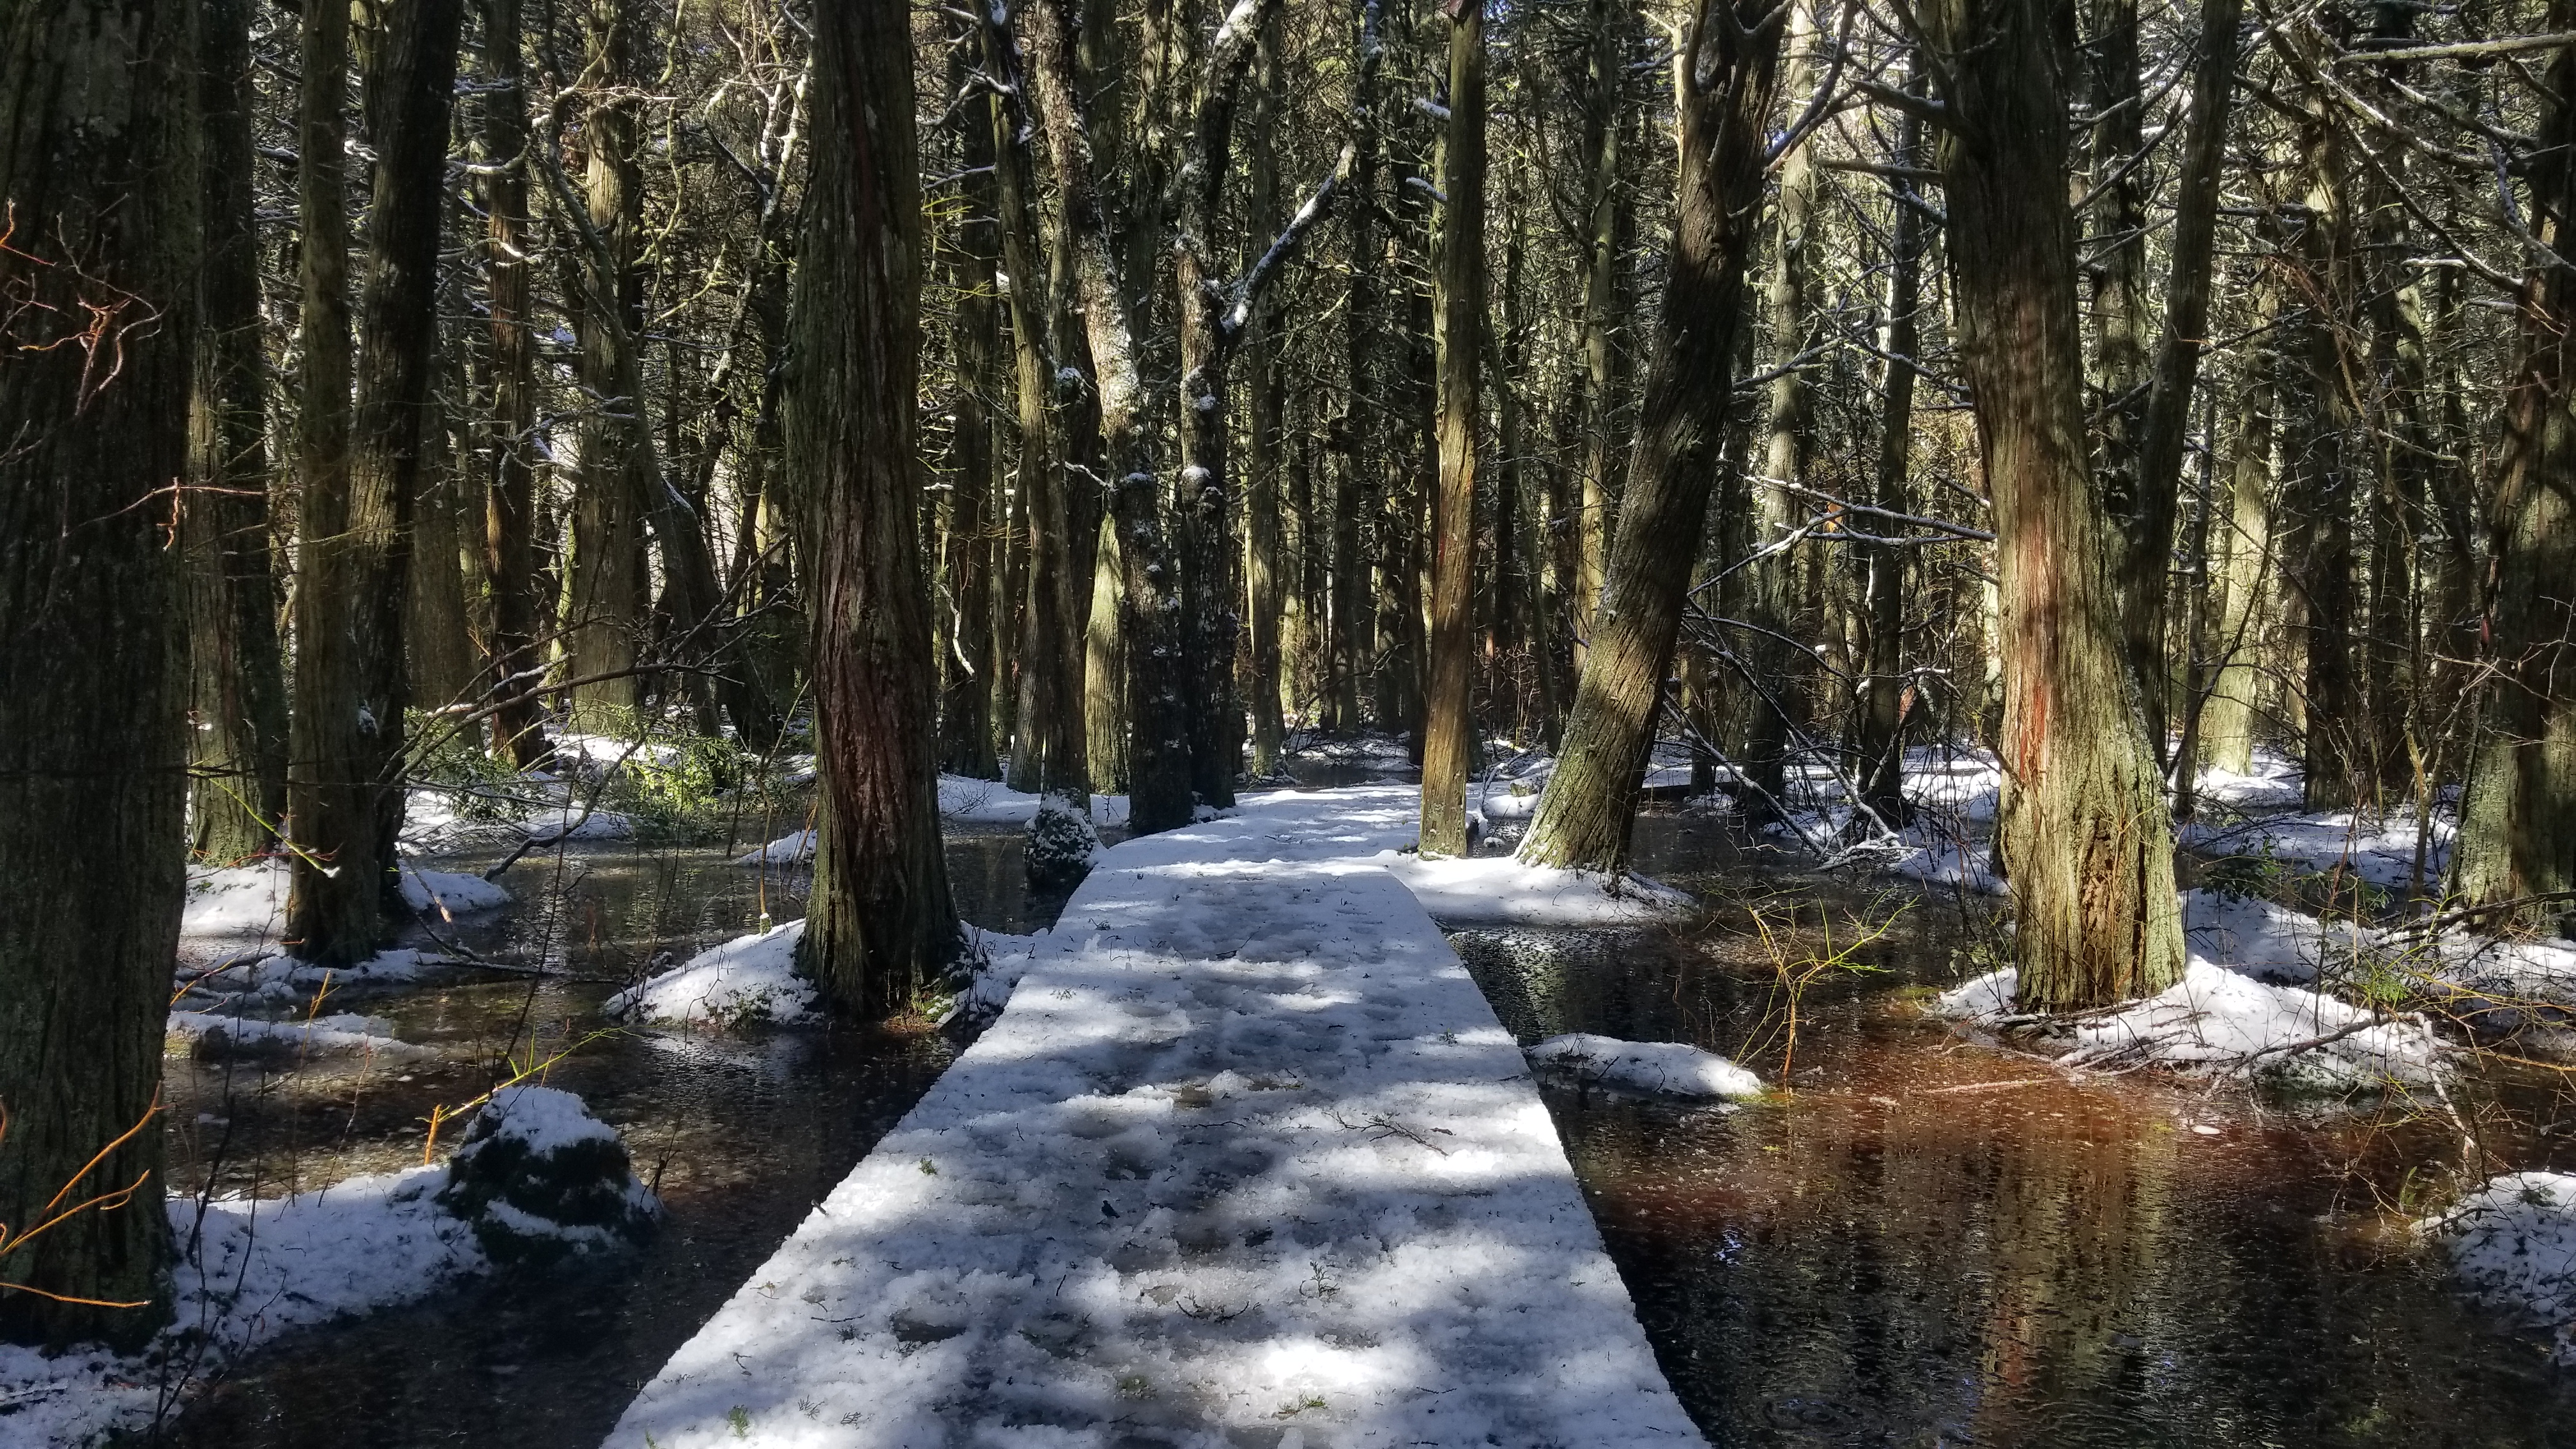 Snowy path winds through a swamp